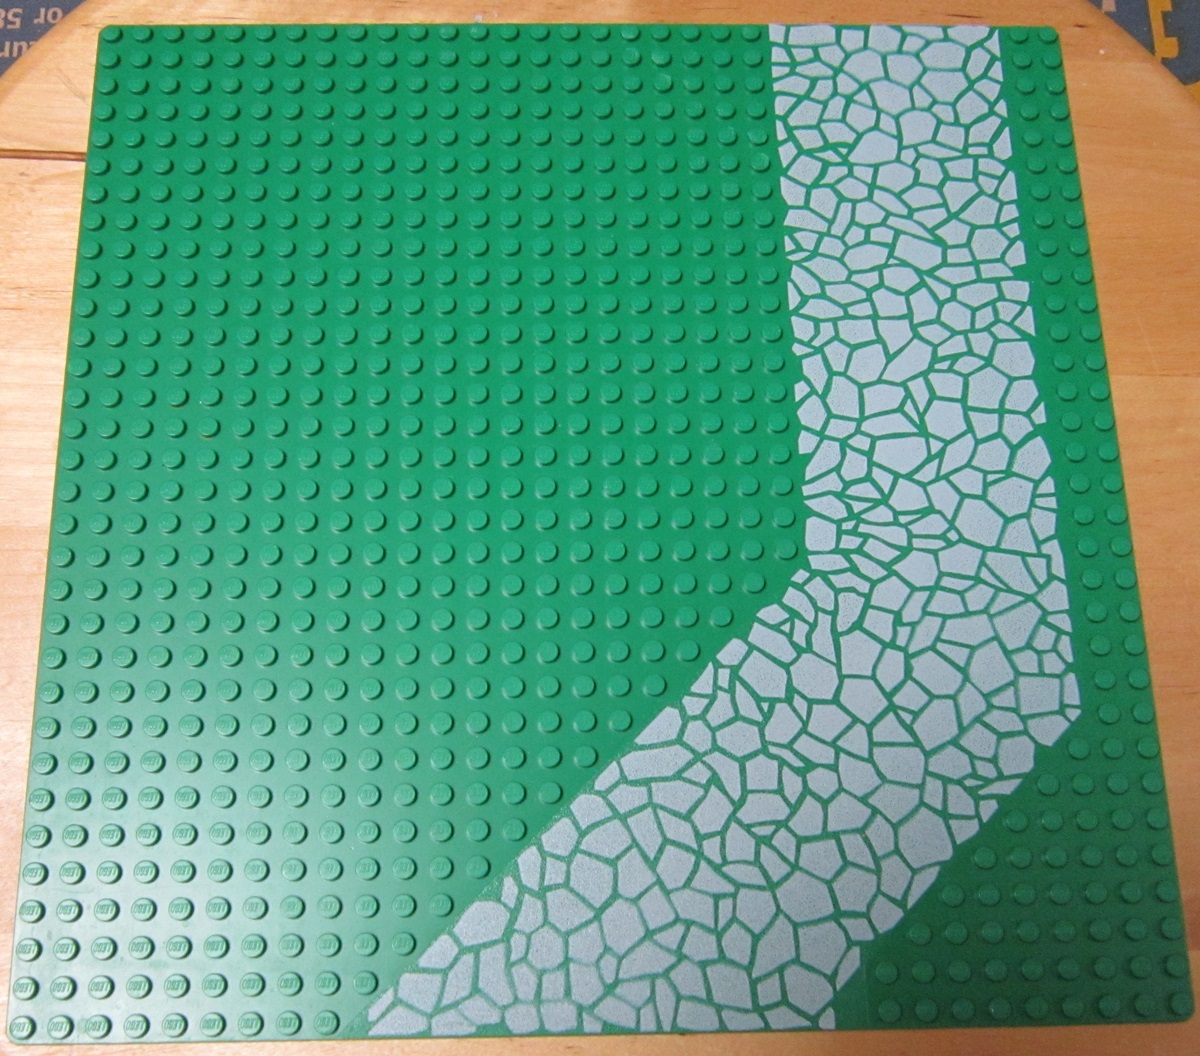 0080 Lego special plader 32 * 32 (1 mm)